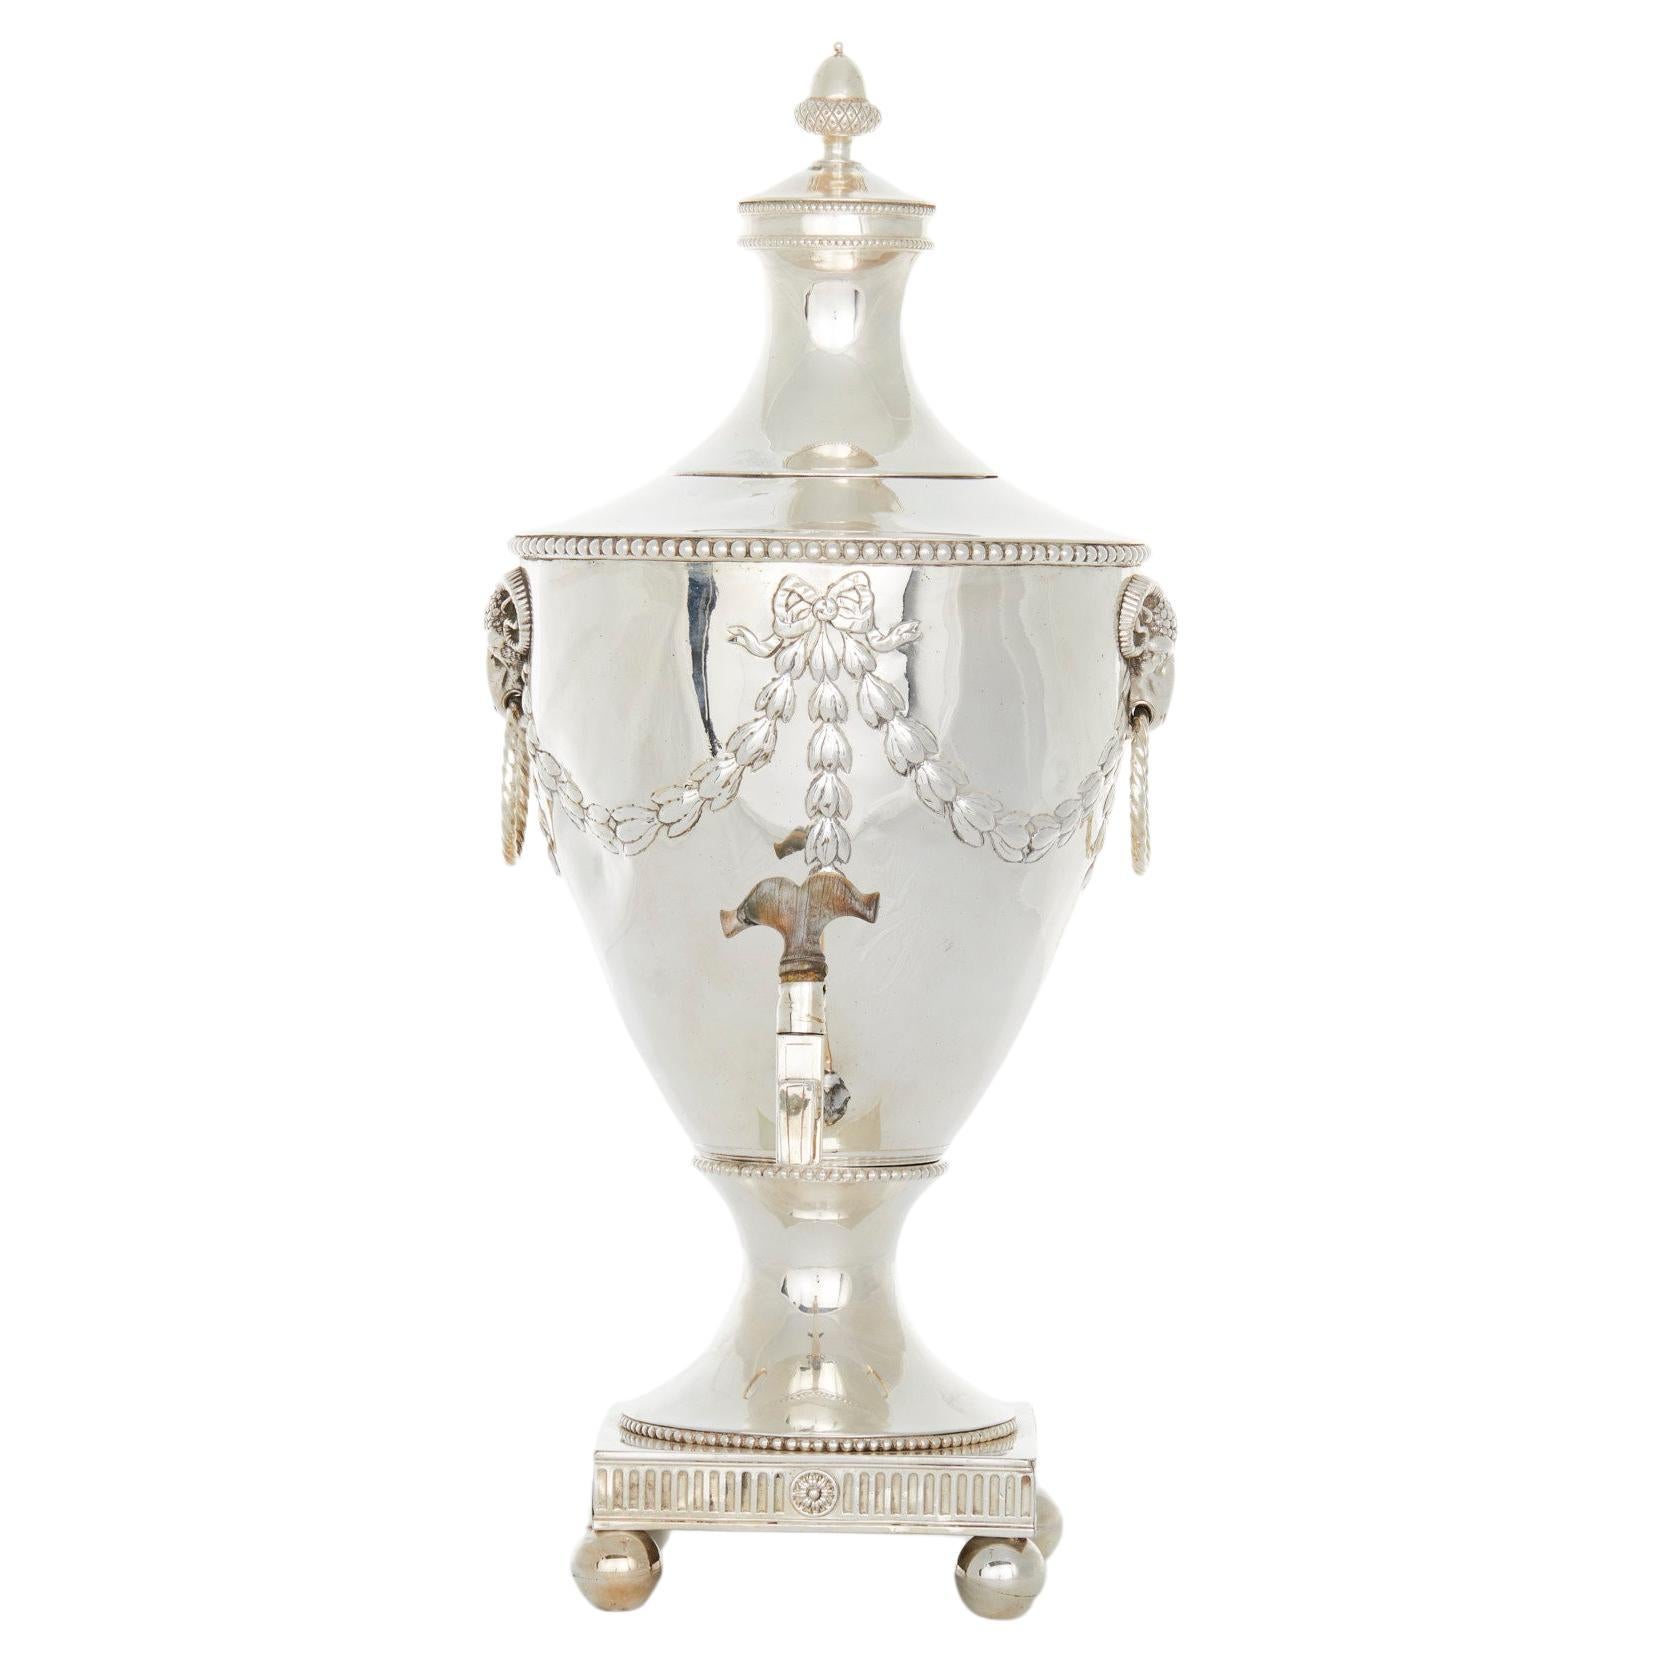 19th Century English Silver Plate Samovar / Tea Urn